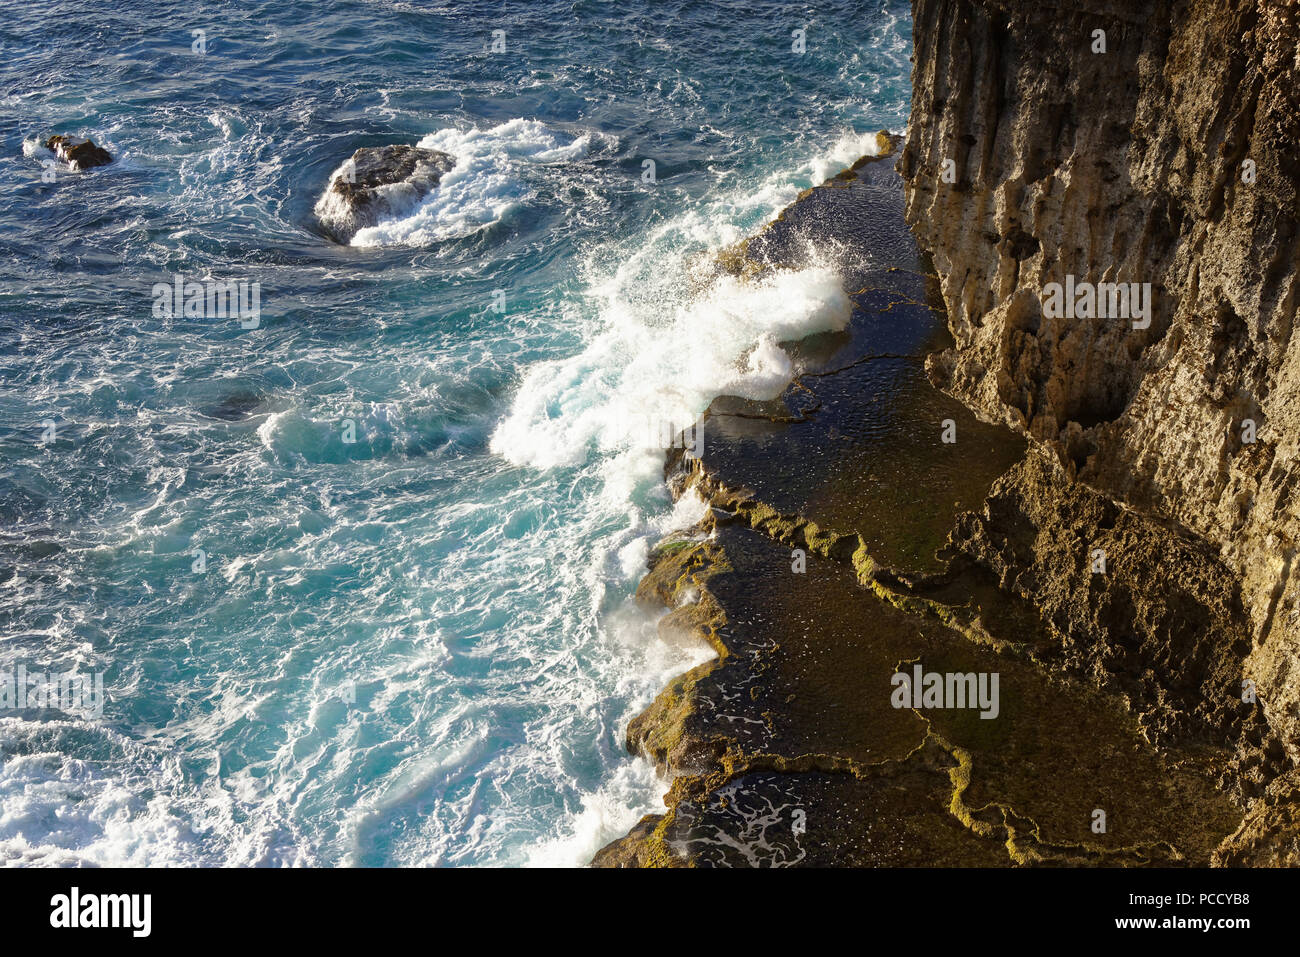 Sea crashing onto rocks at base of cliff Stock Photo